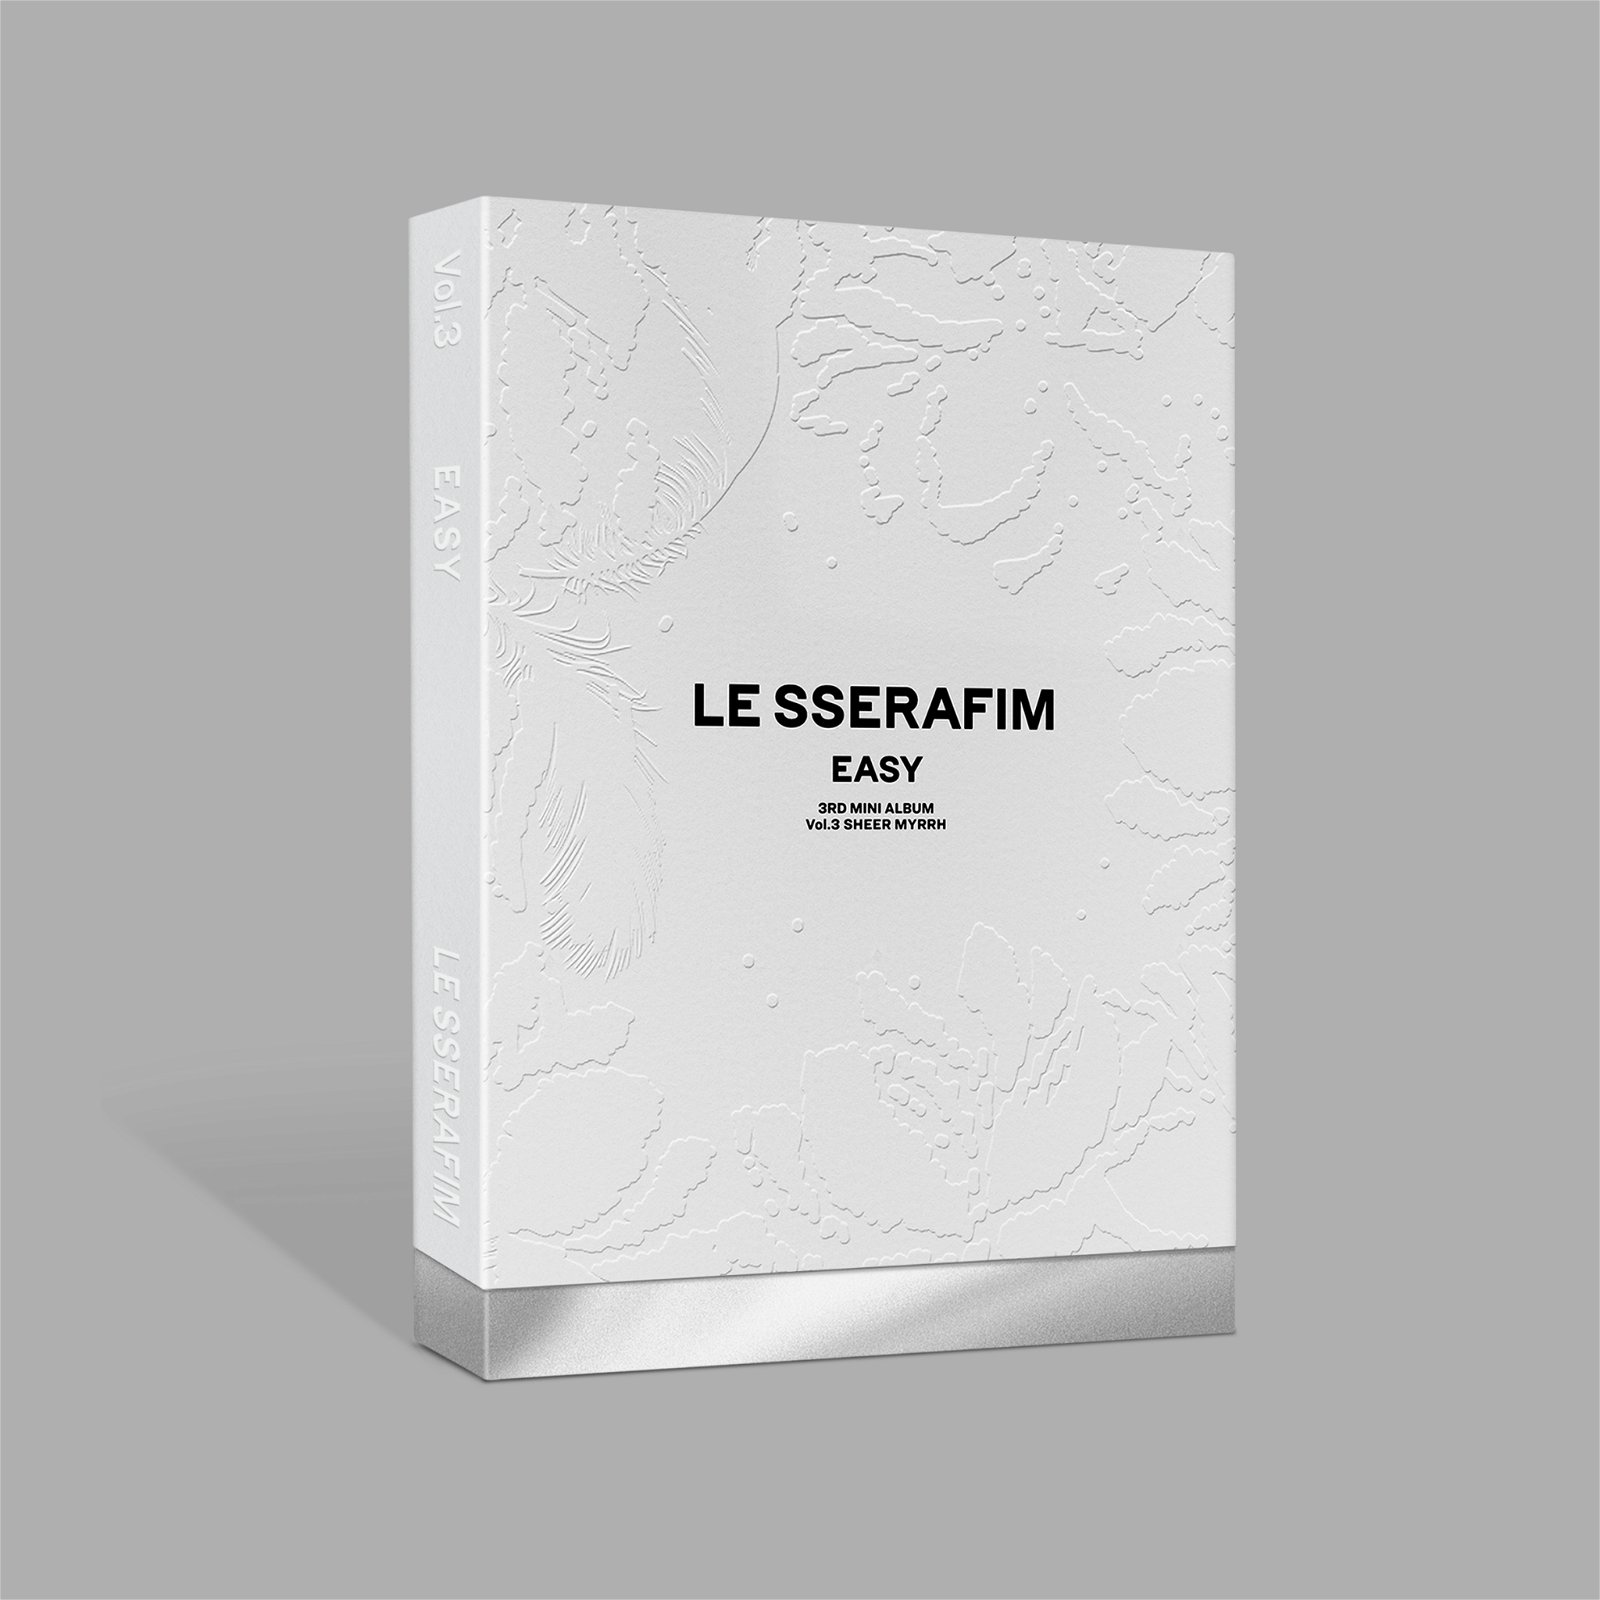 Le Sserafim albums & merchandise | Order online